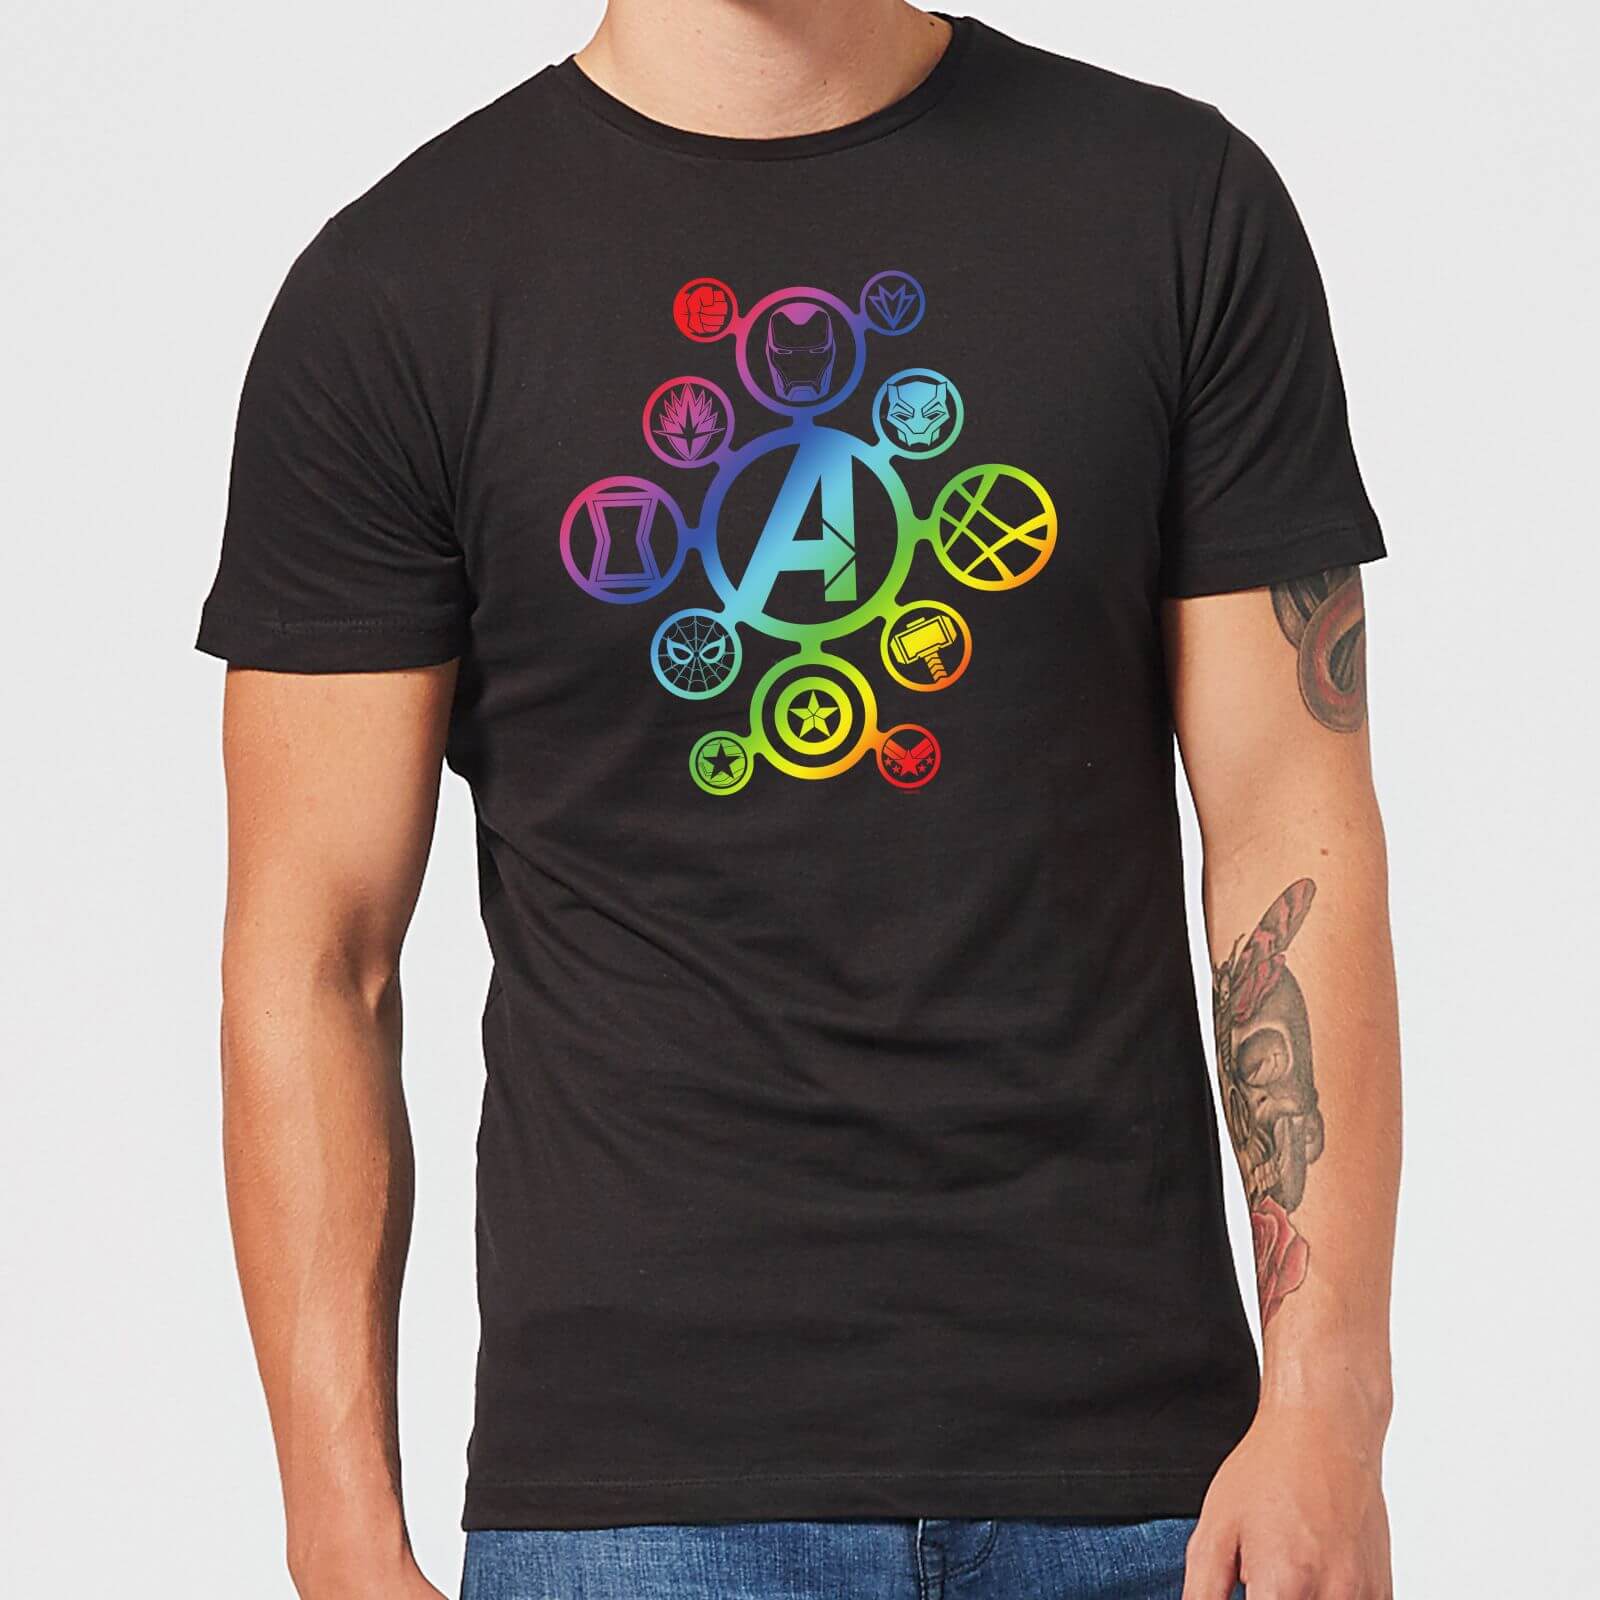 Avengers Rainbow Icon Men's T-Shirt - Black - L